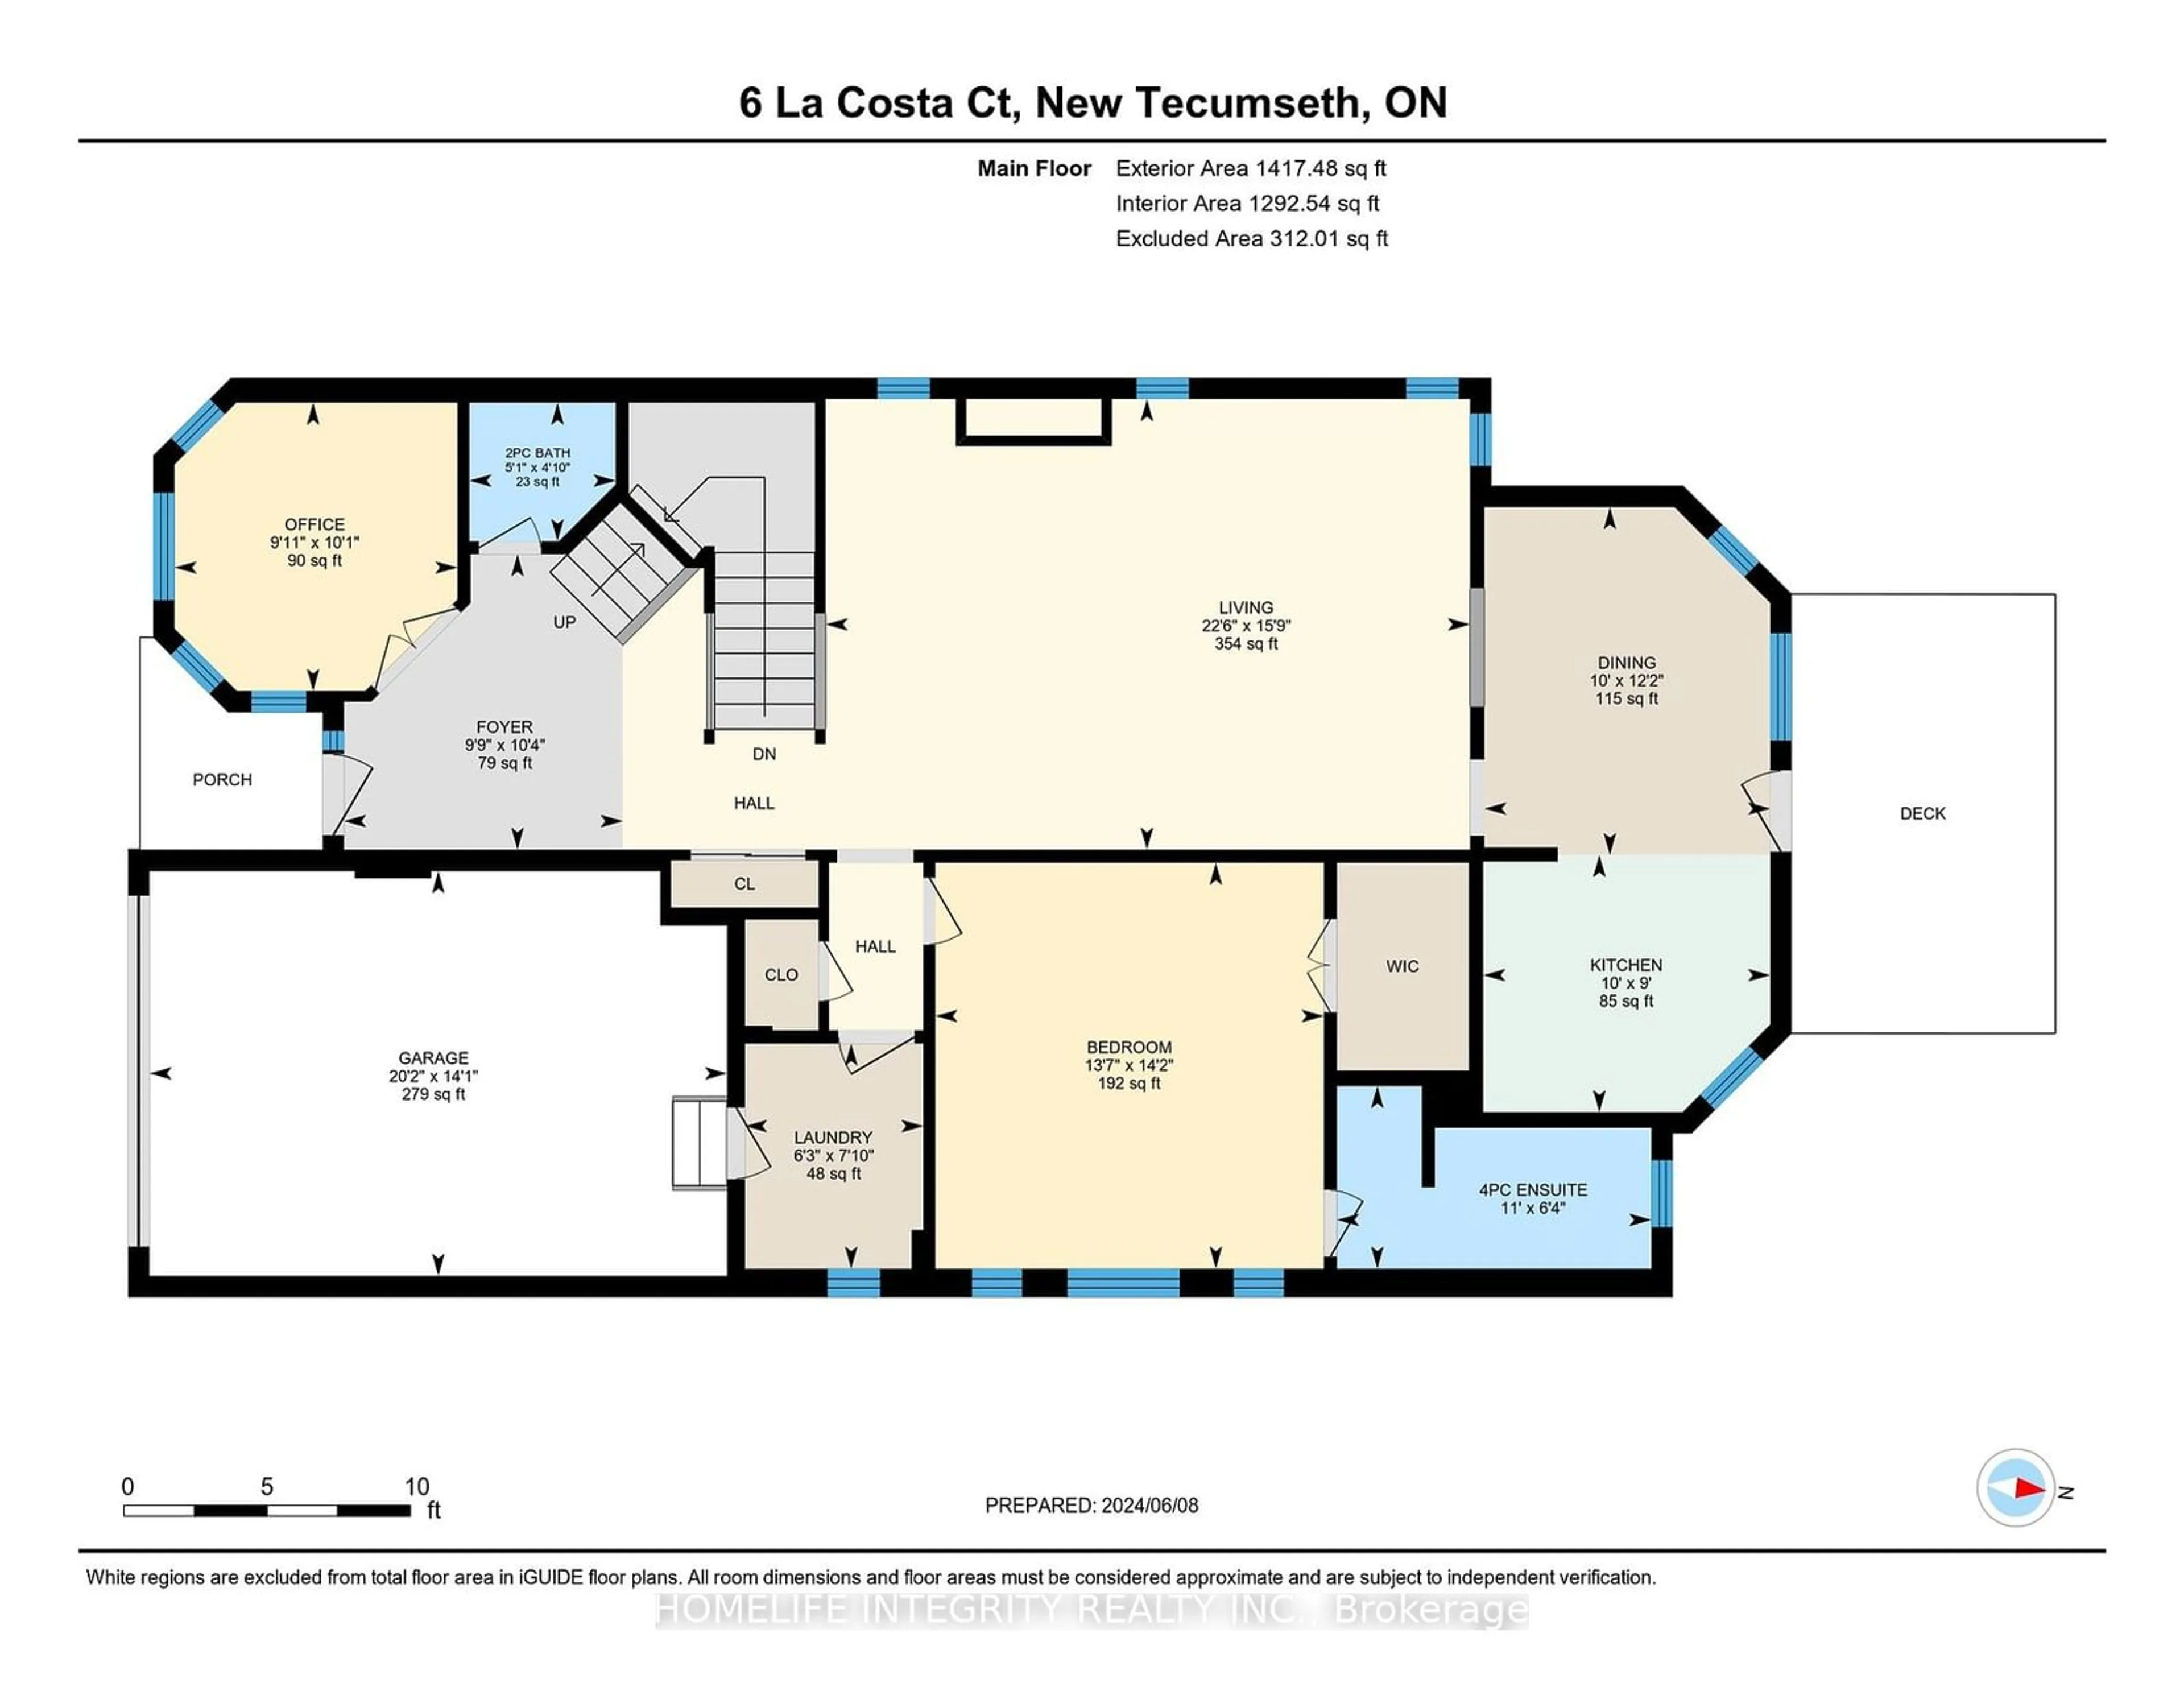 Floor plan for 6 La Costa Crt, New Tecumseth Ontario L9R 1Z4